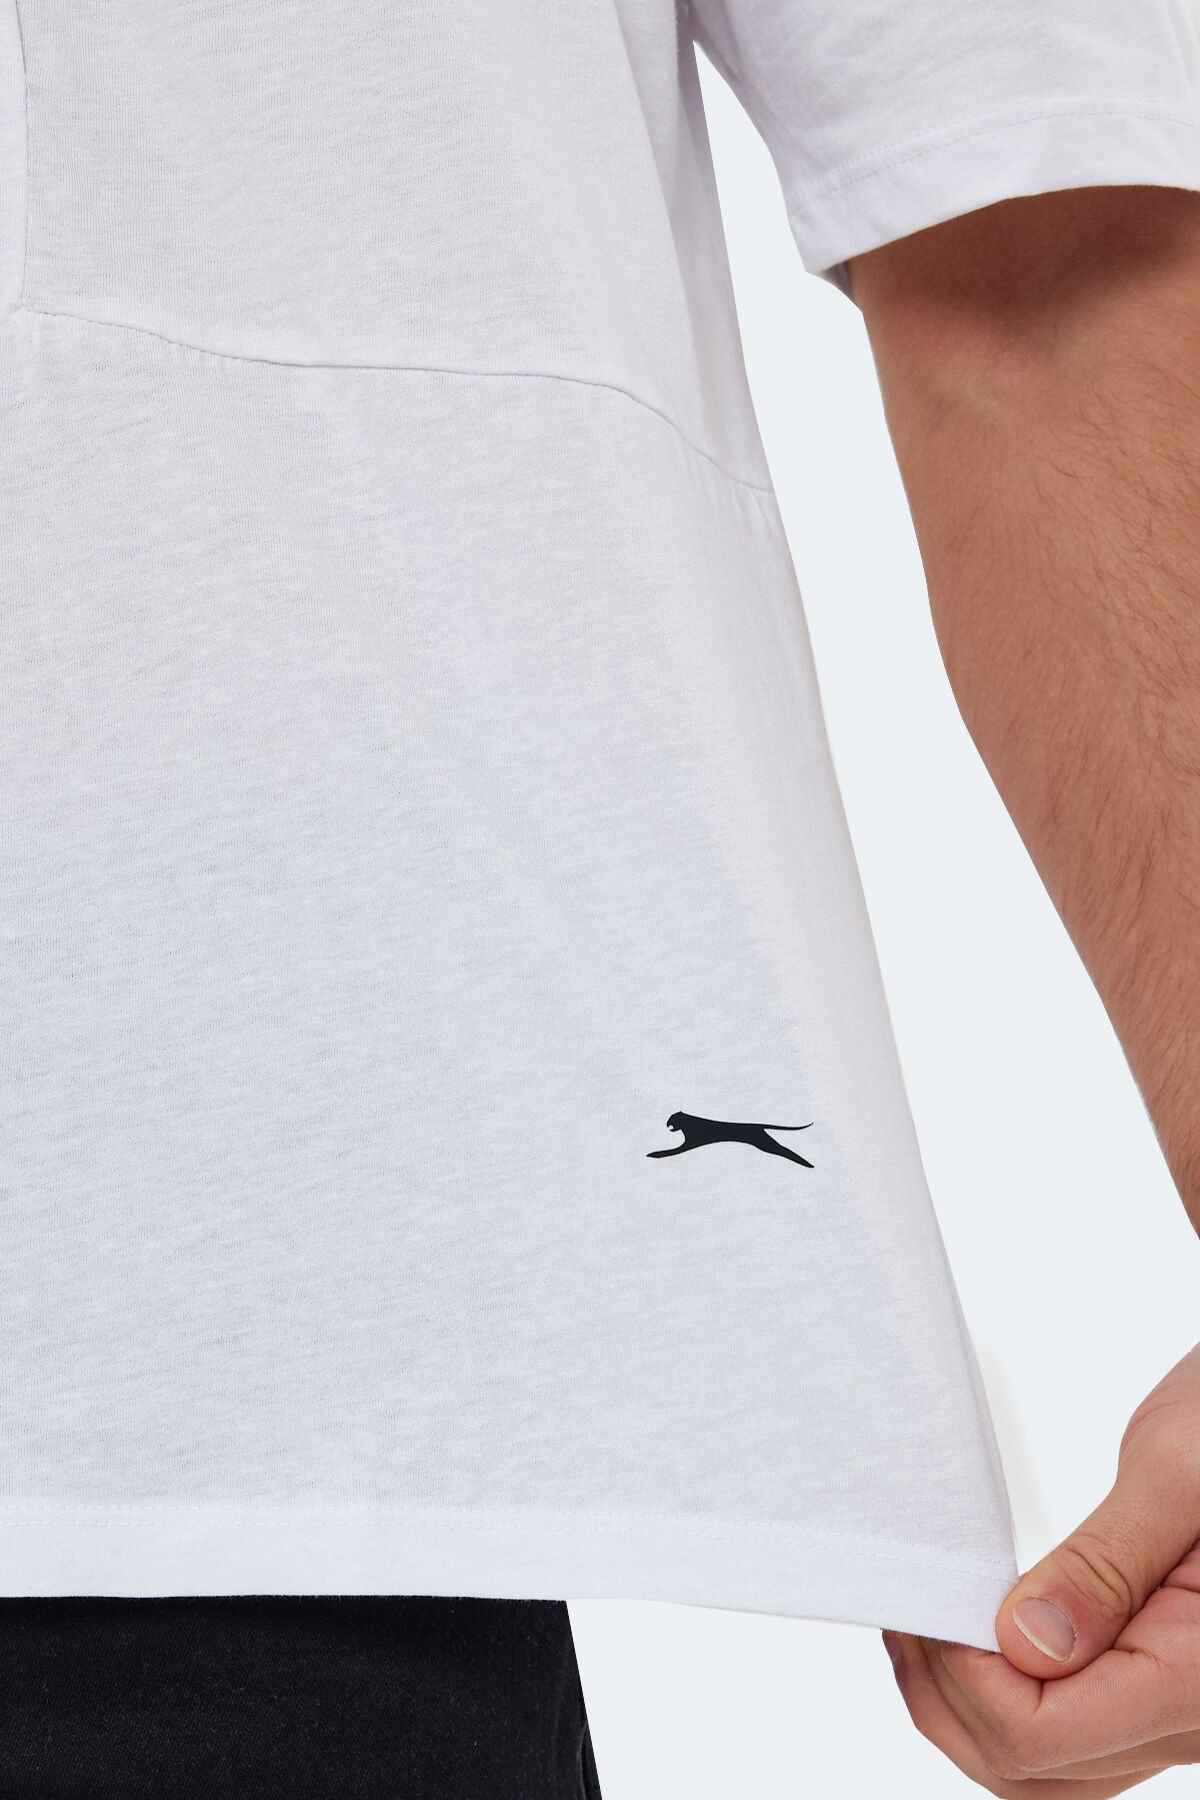 Slazenger KAURI OVER Erkek Kısa Kol T-Shirt Beyaz - Thumbnail